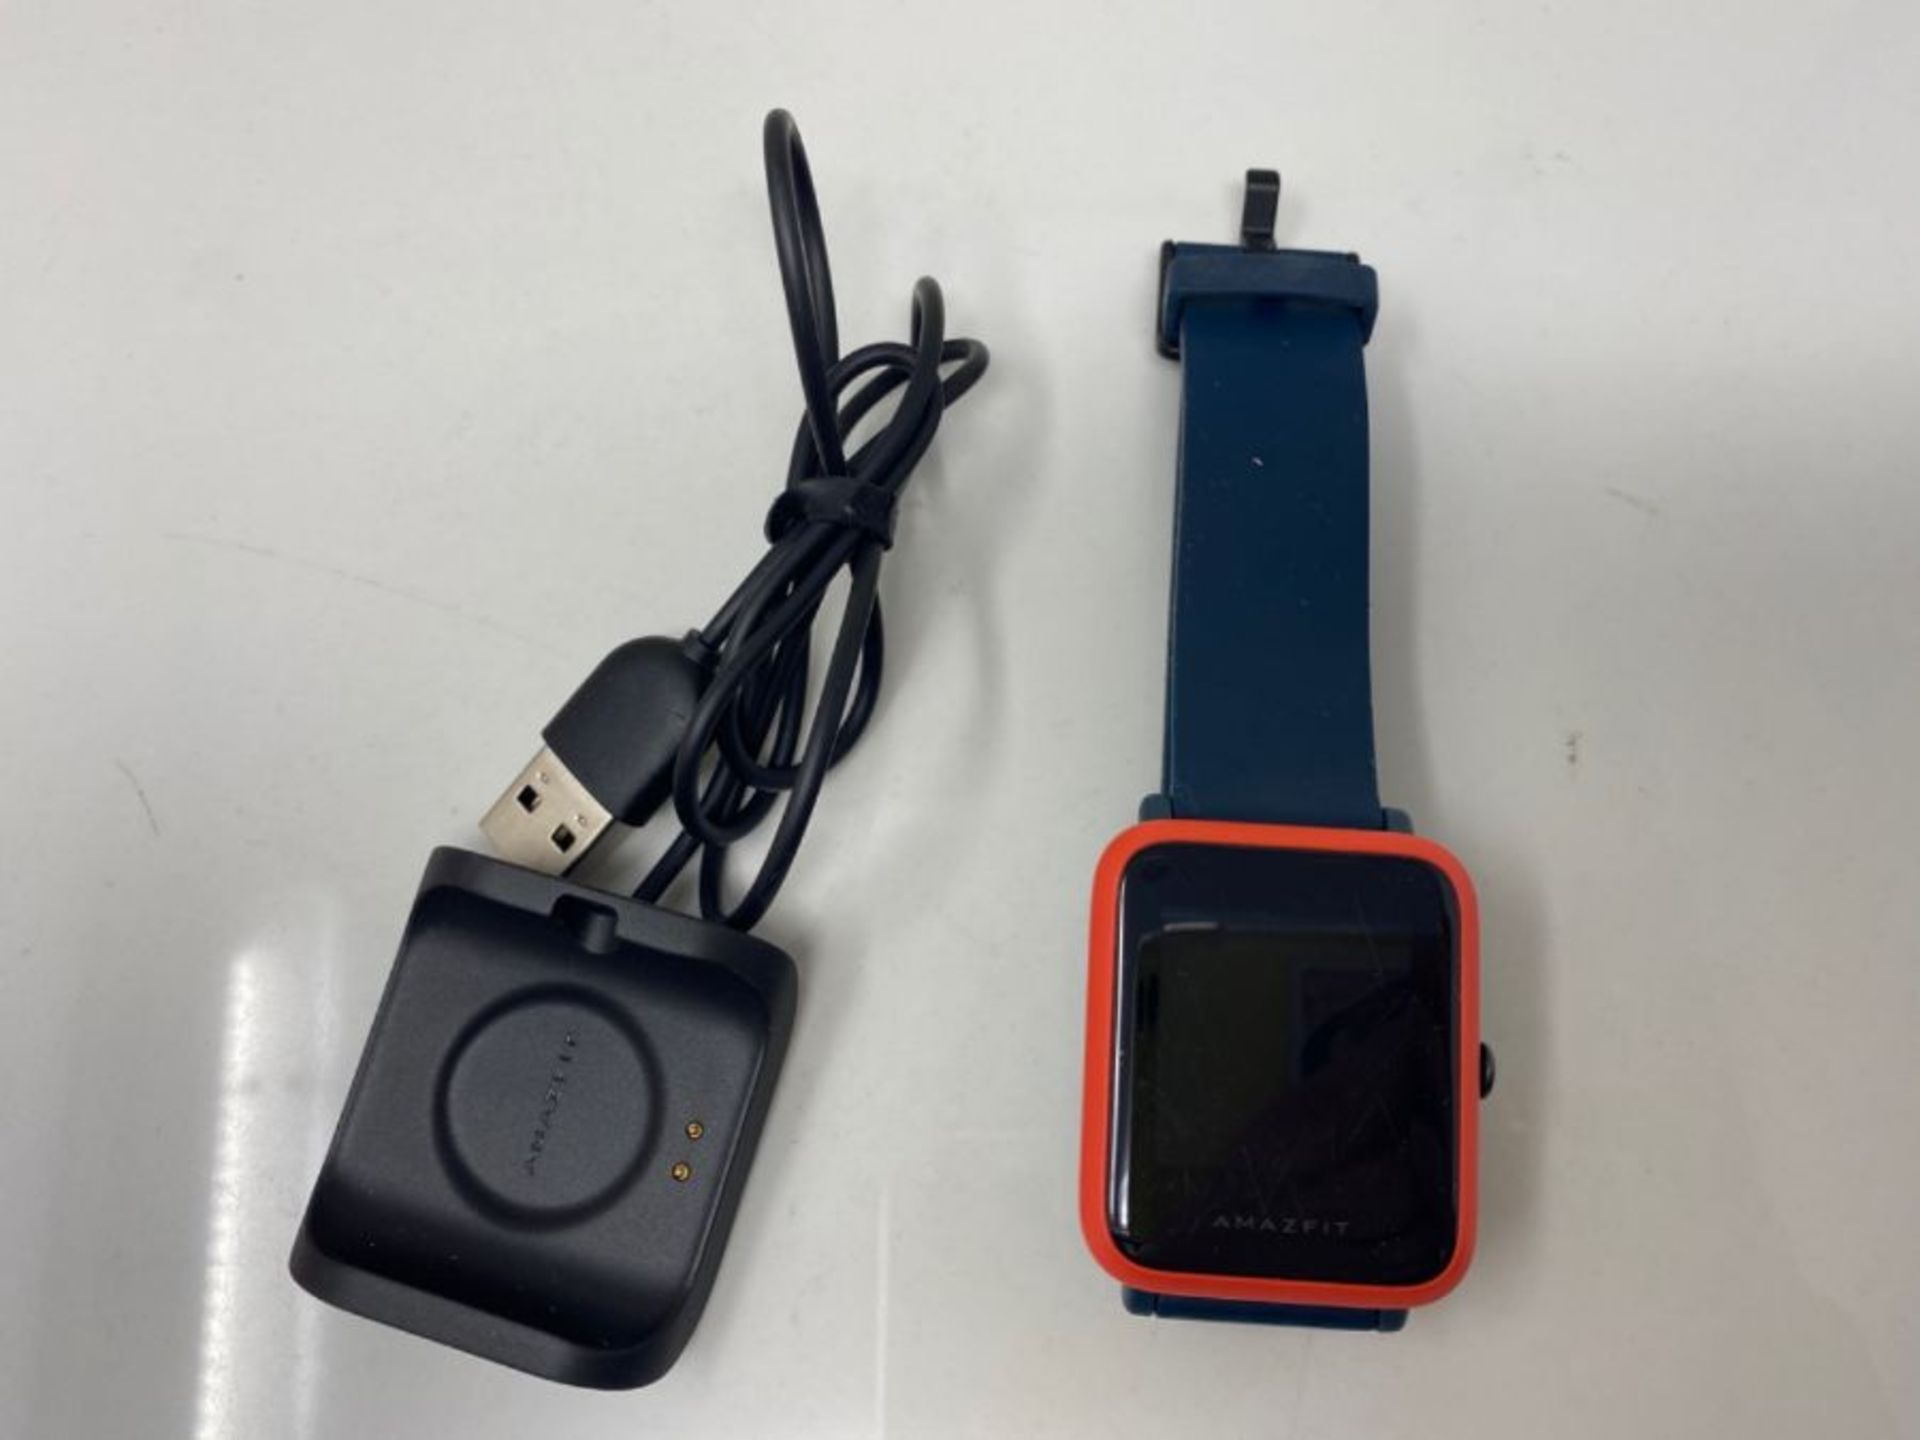 Amazfit Bip S - Smartwatch Red Orange - Image 3 of 3